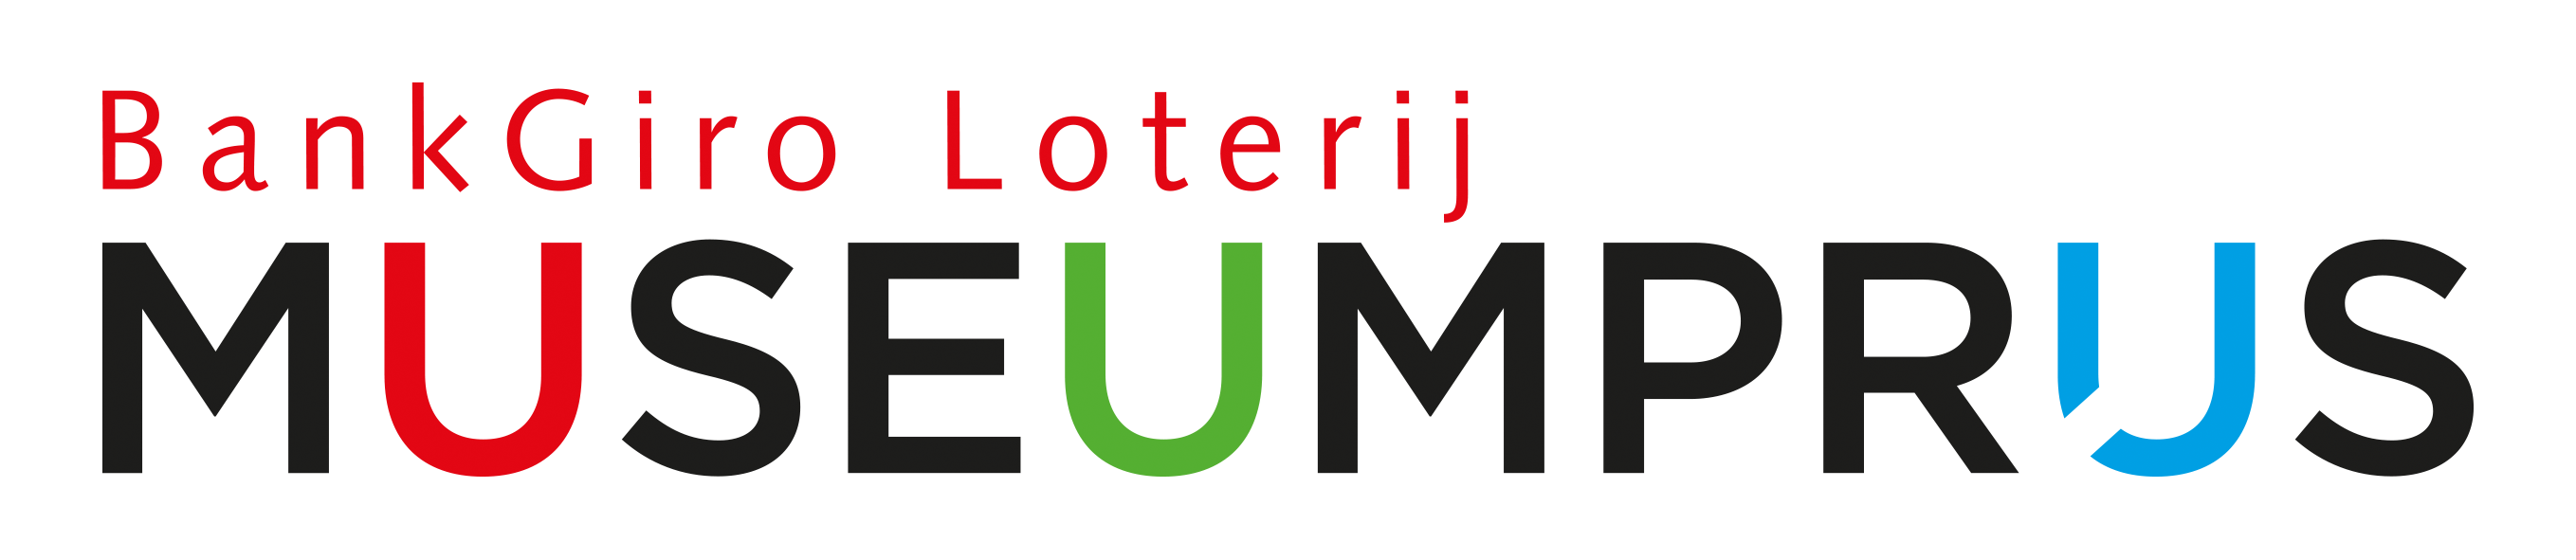 logo museumprijs